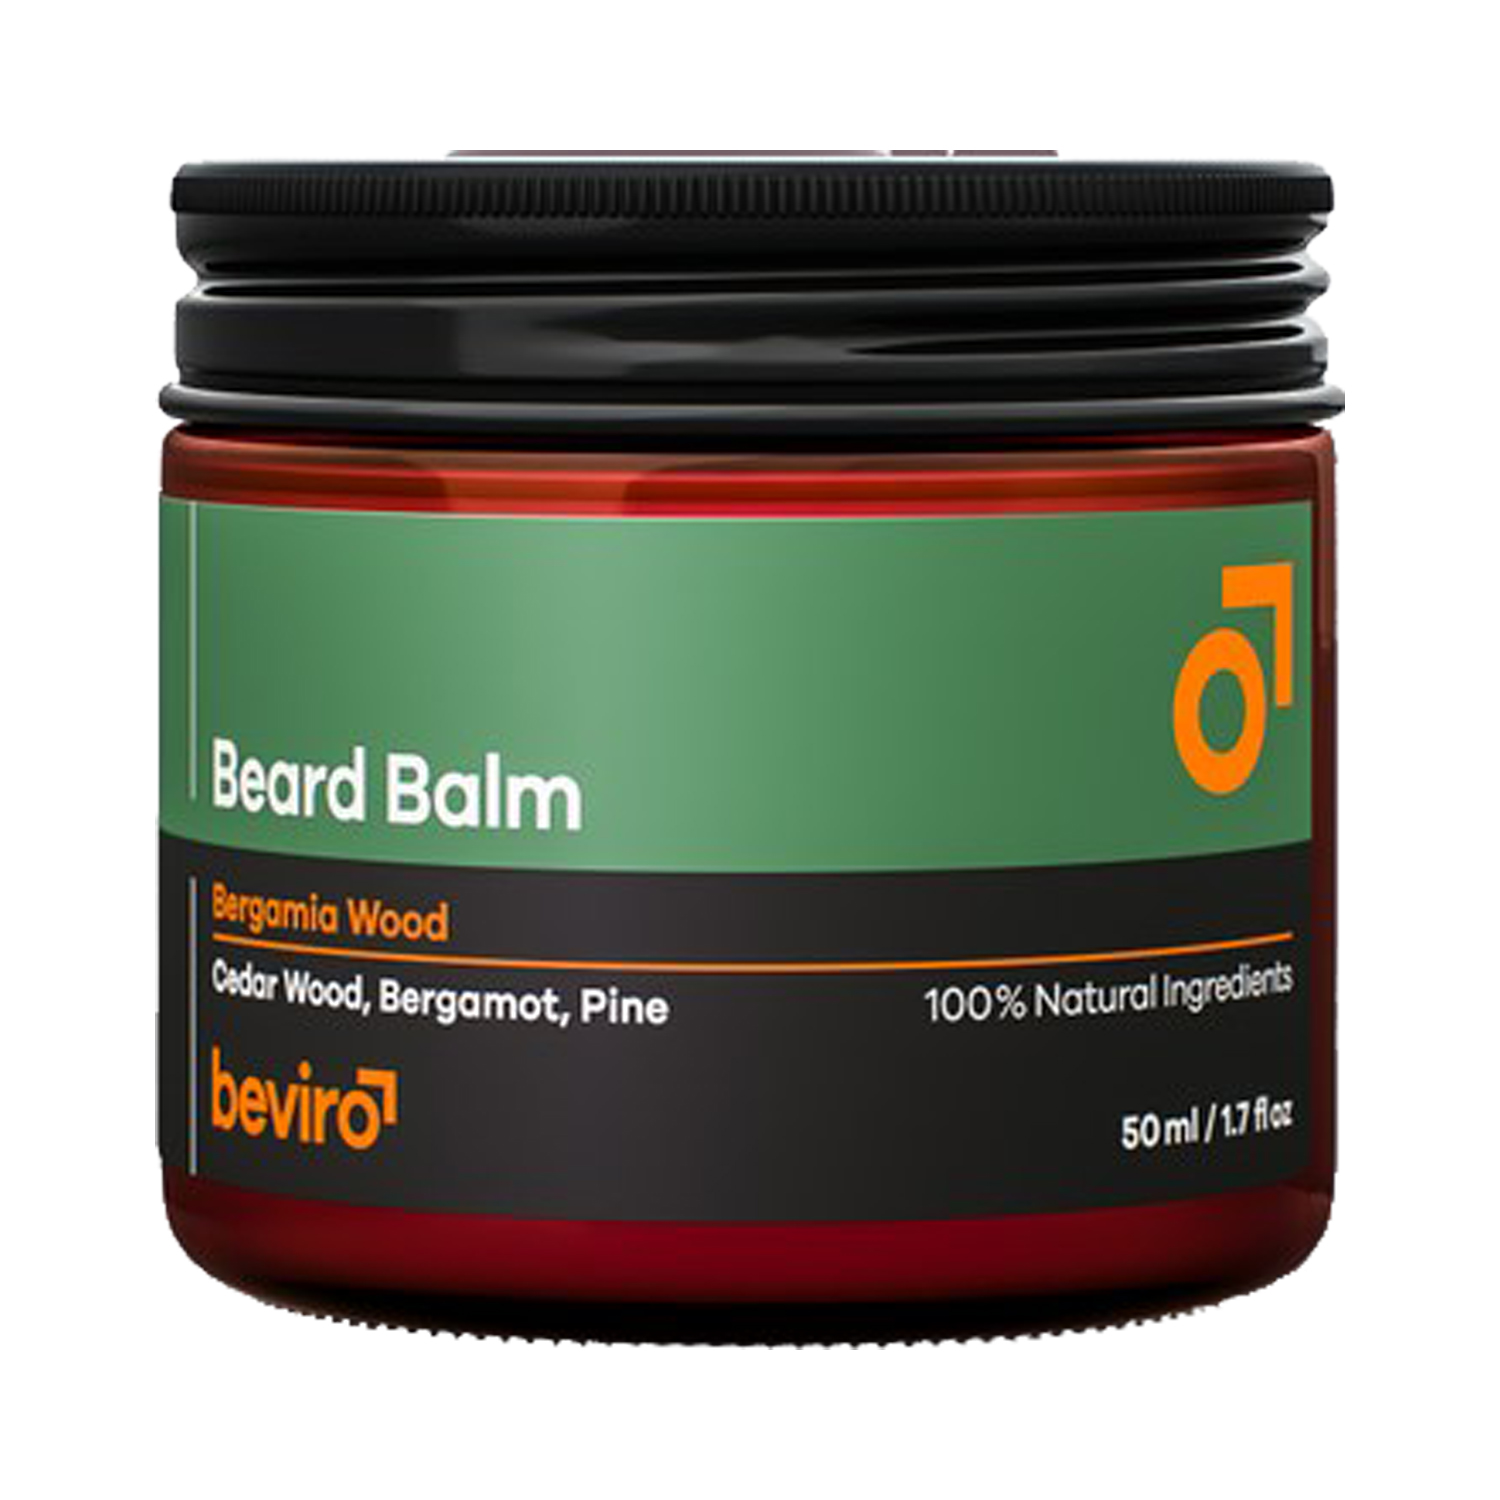 beviro - Beard Balm - Bergamia Wood - Bartbalsam